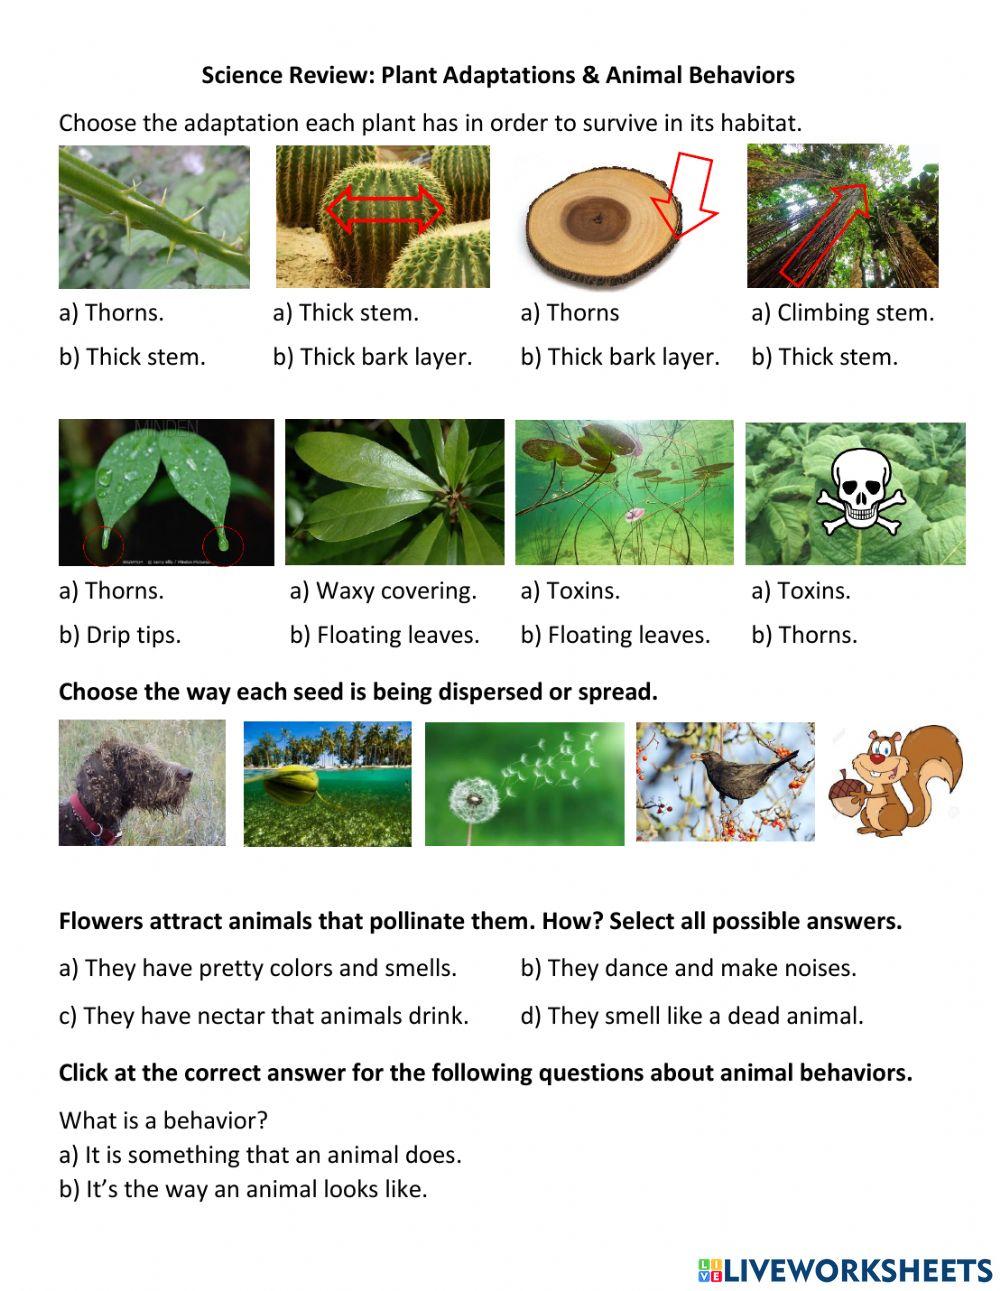 Science quiz plant adaptations and animal behaviors